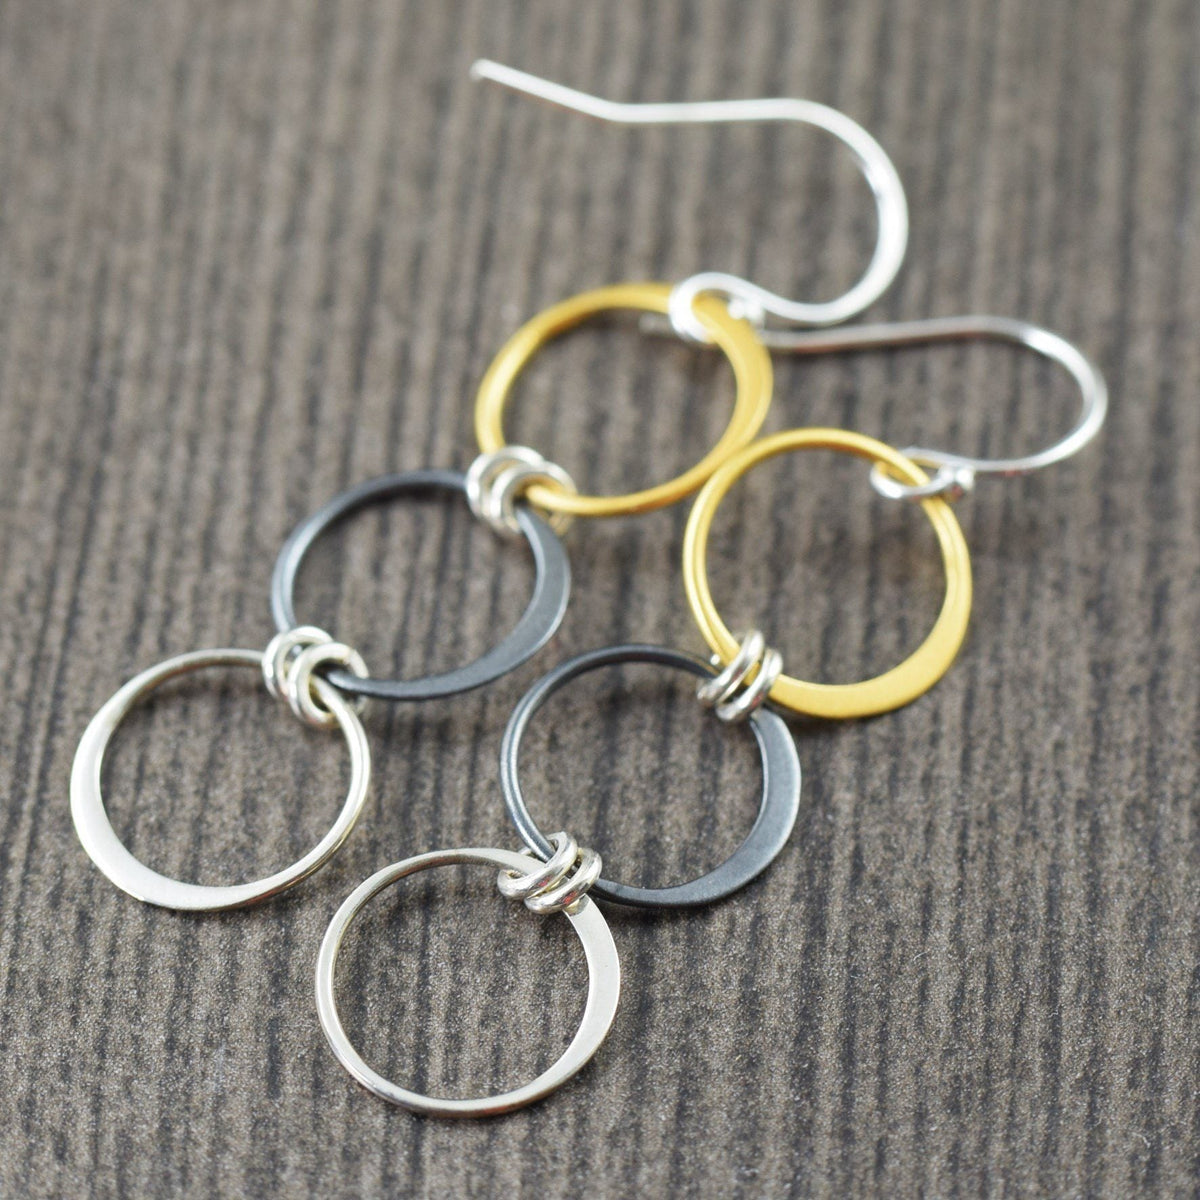 Silver hoop earrings for women in blackened silver and vermeil